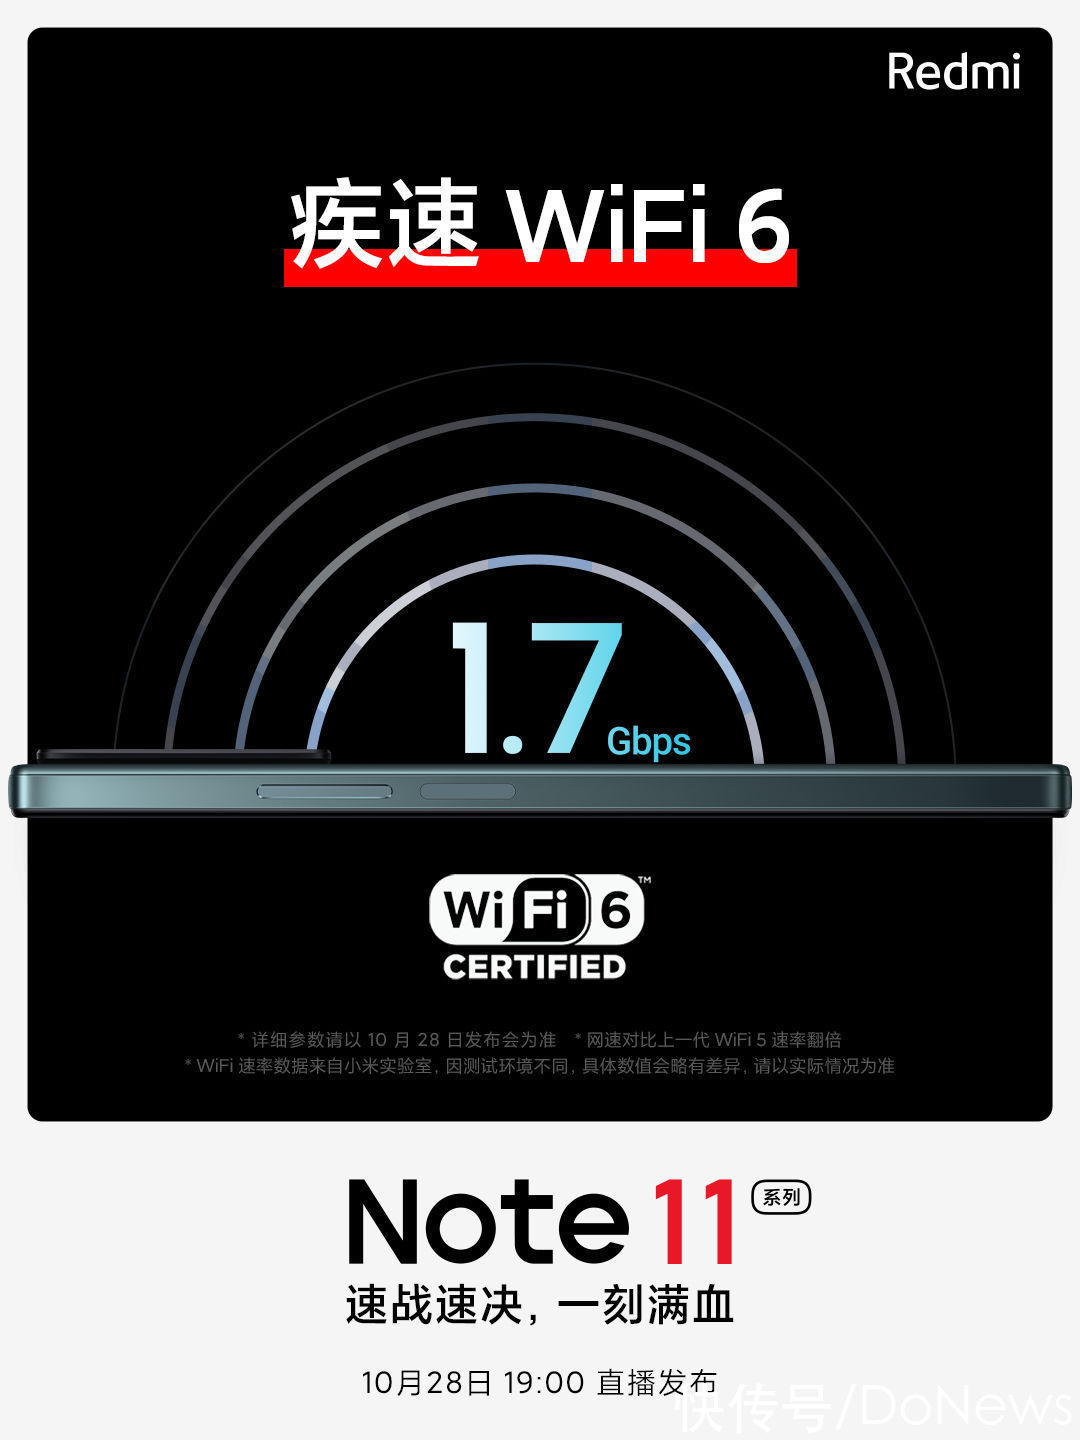 nfc|RedmiNote11确认支持多功能NFC、Wi-Fi6与X轴线性马达